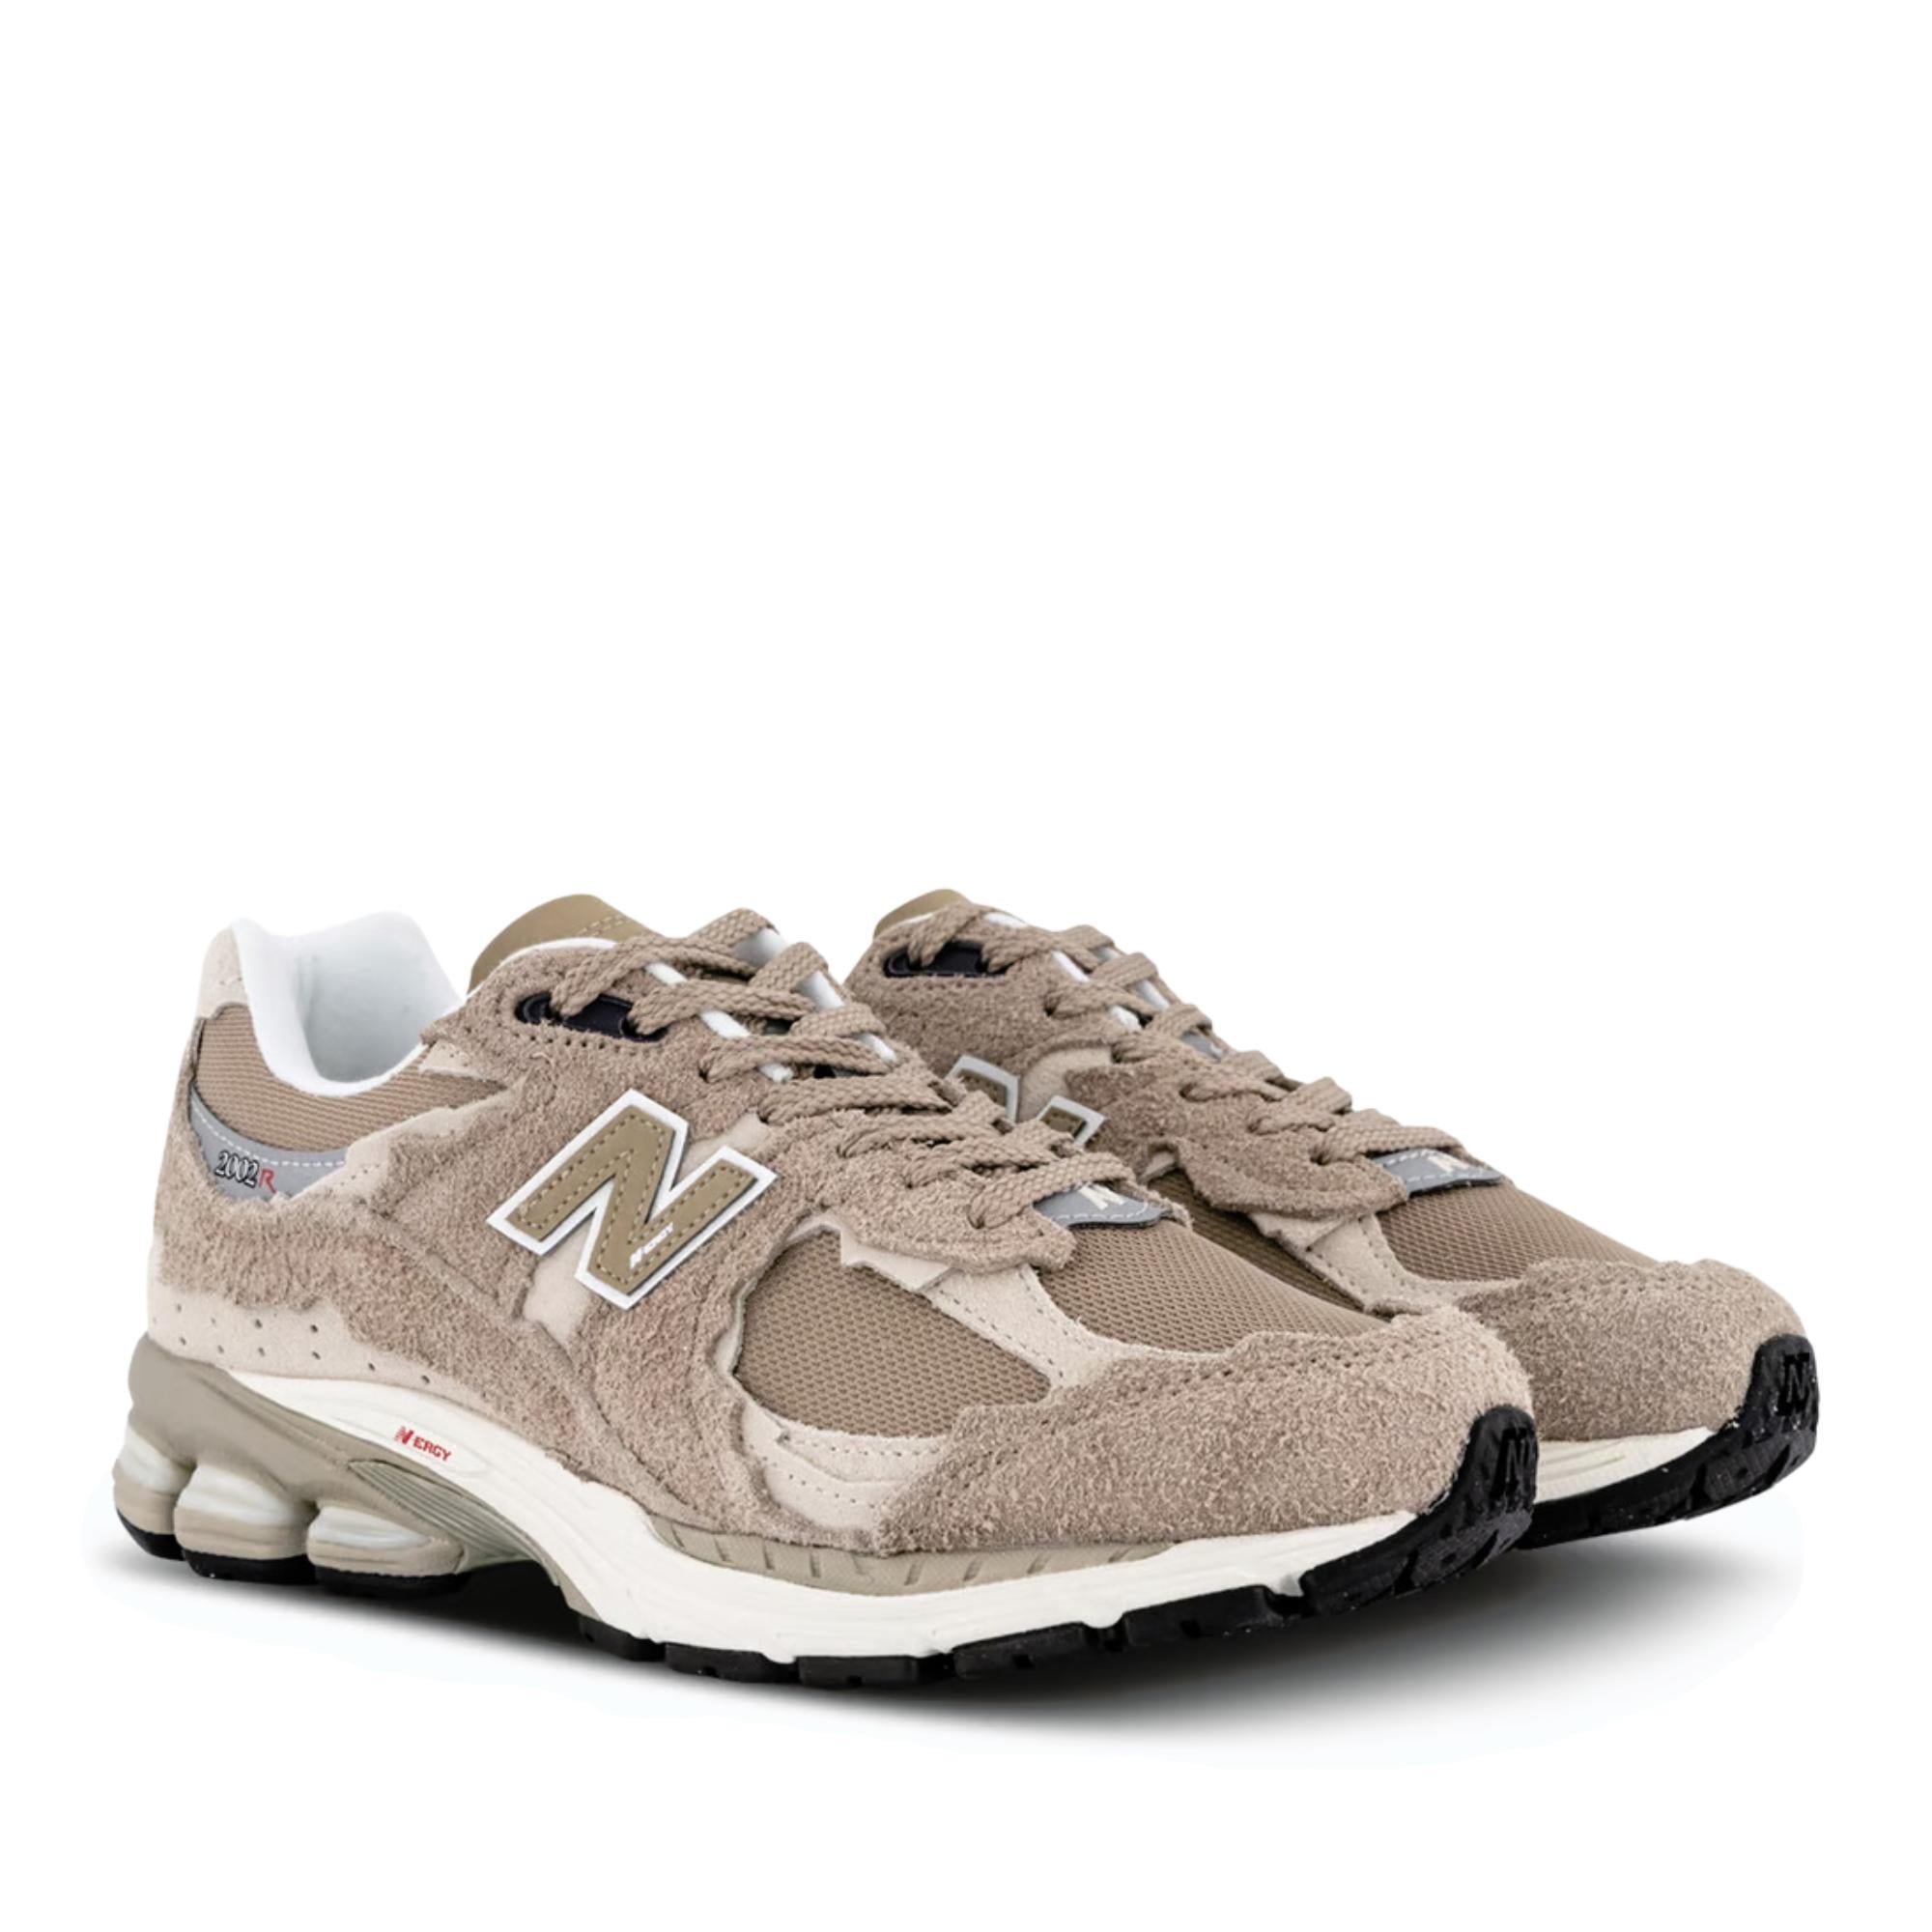 New Balance 2002Rdl ’Desert Sand’ Sneakers